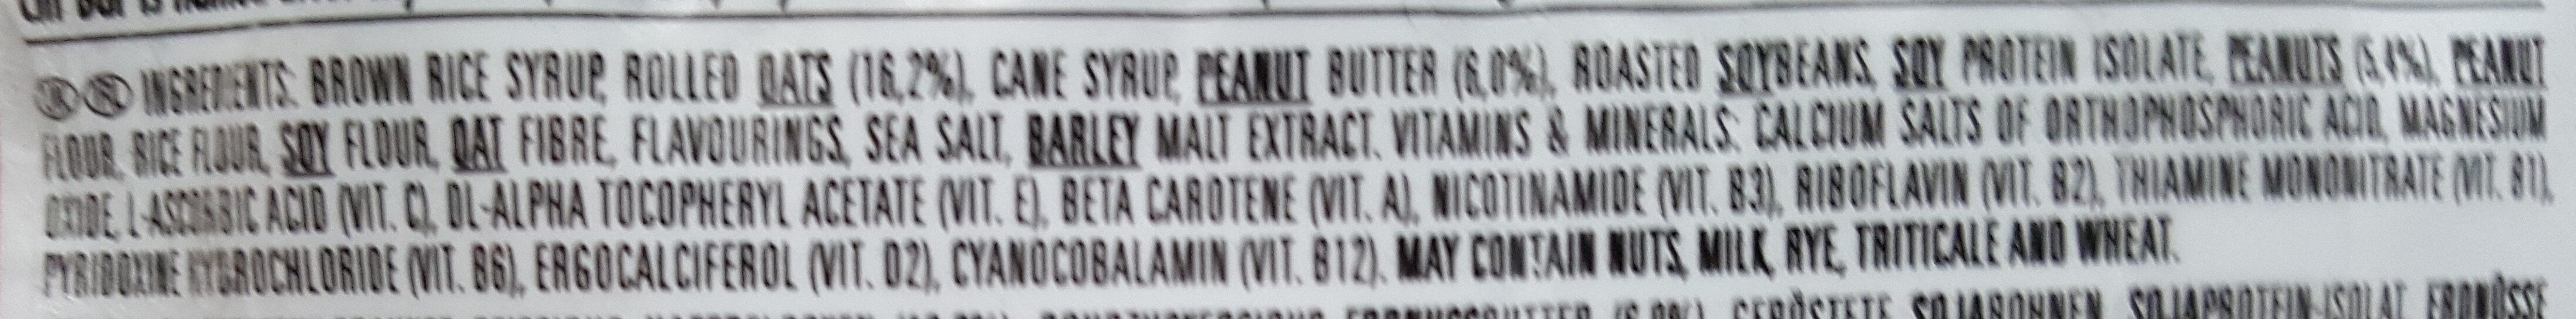 Crunchy Peanut Butter Bar - Ingredienti - en